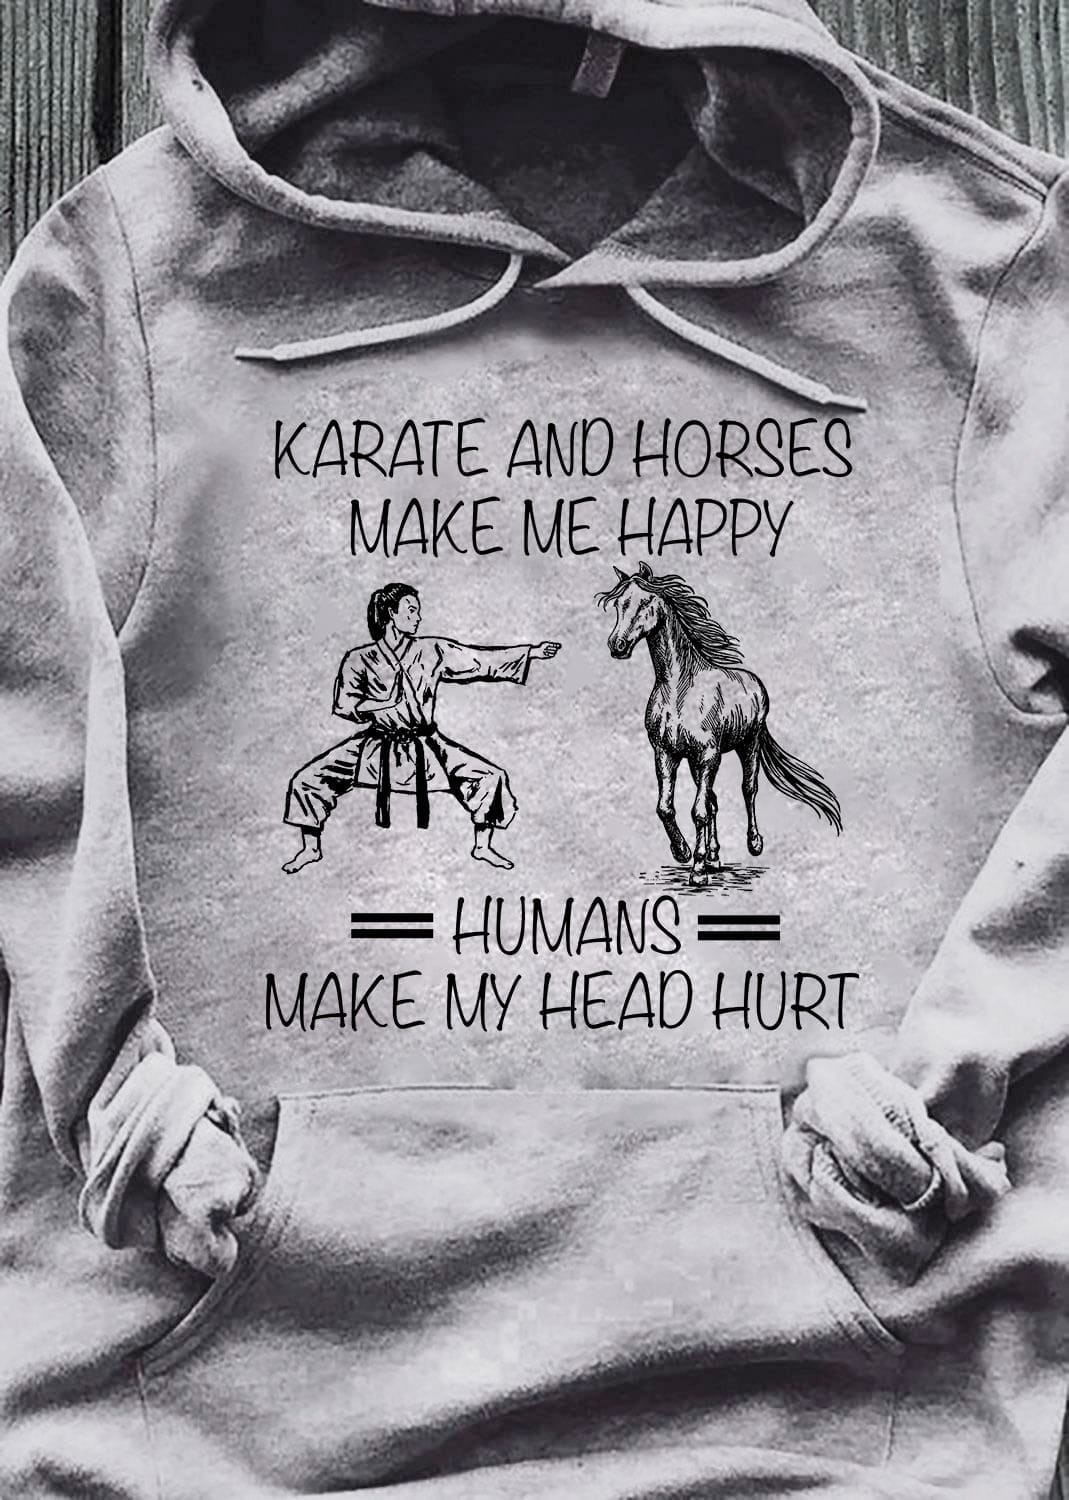 Karate and horses make me happy, humans make my head hurt - Woman karate trainer, horse loyal friend